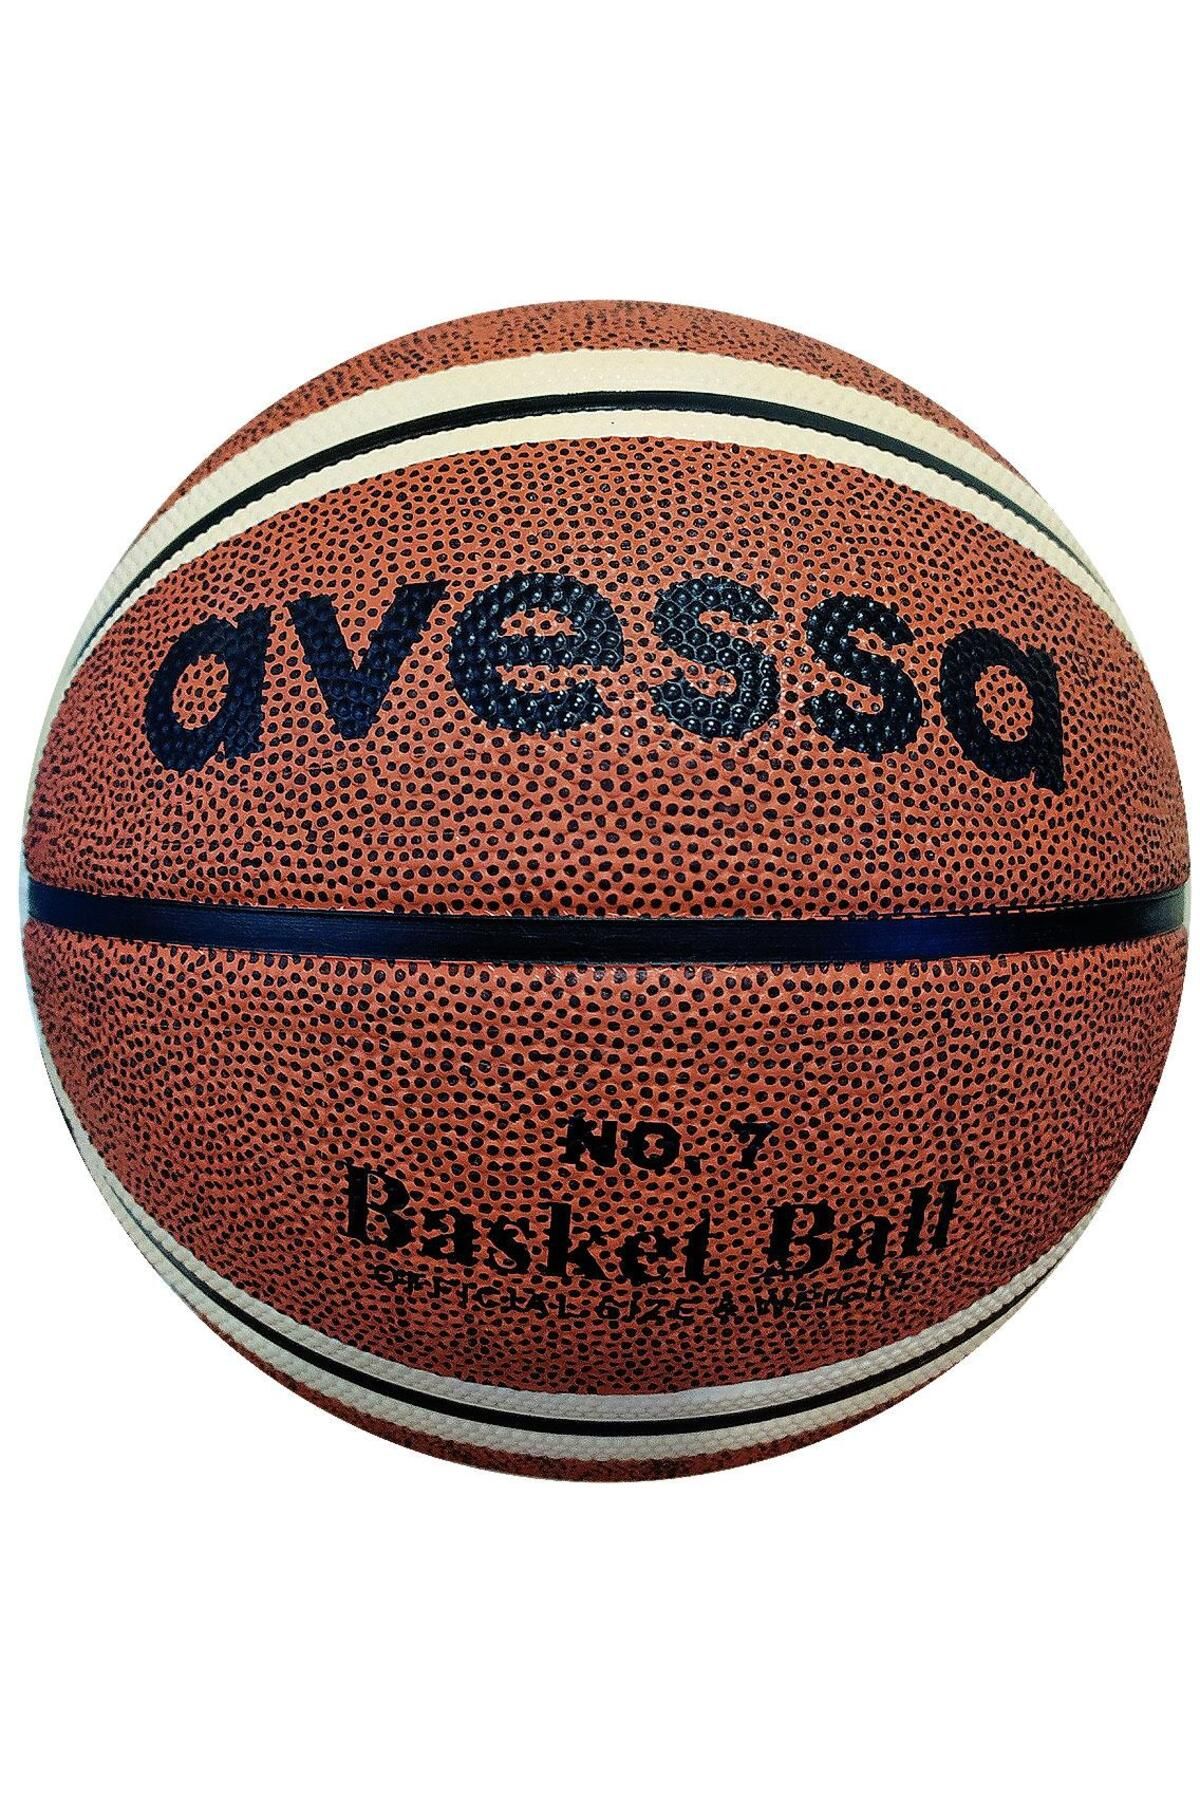 Avessa Bt-170 Profesyonel Basketbol Topu No6